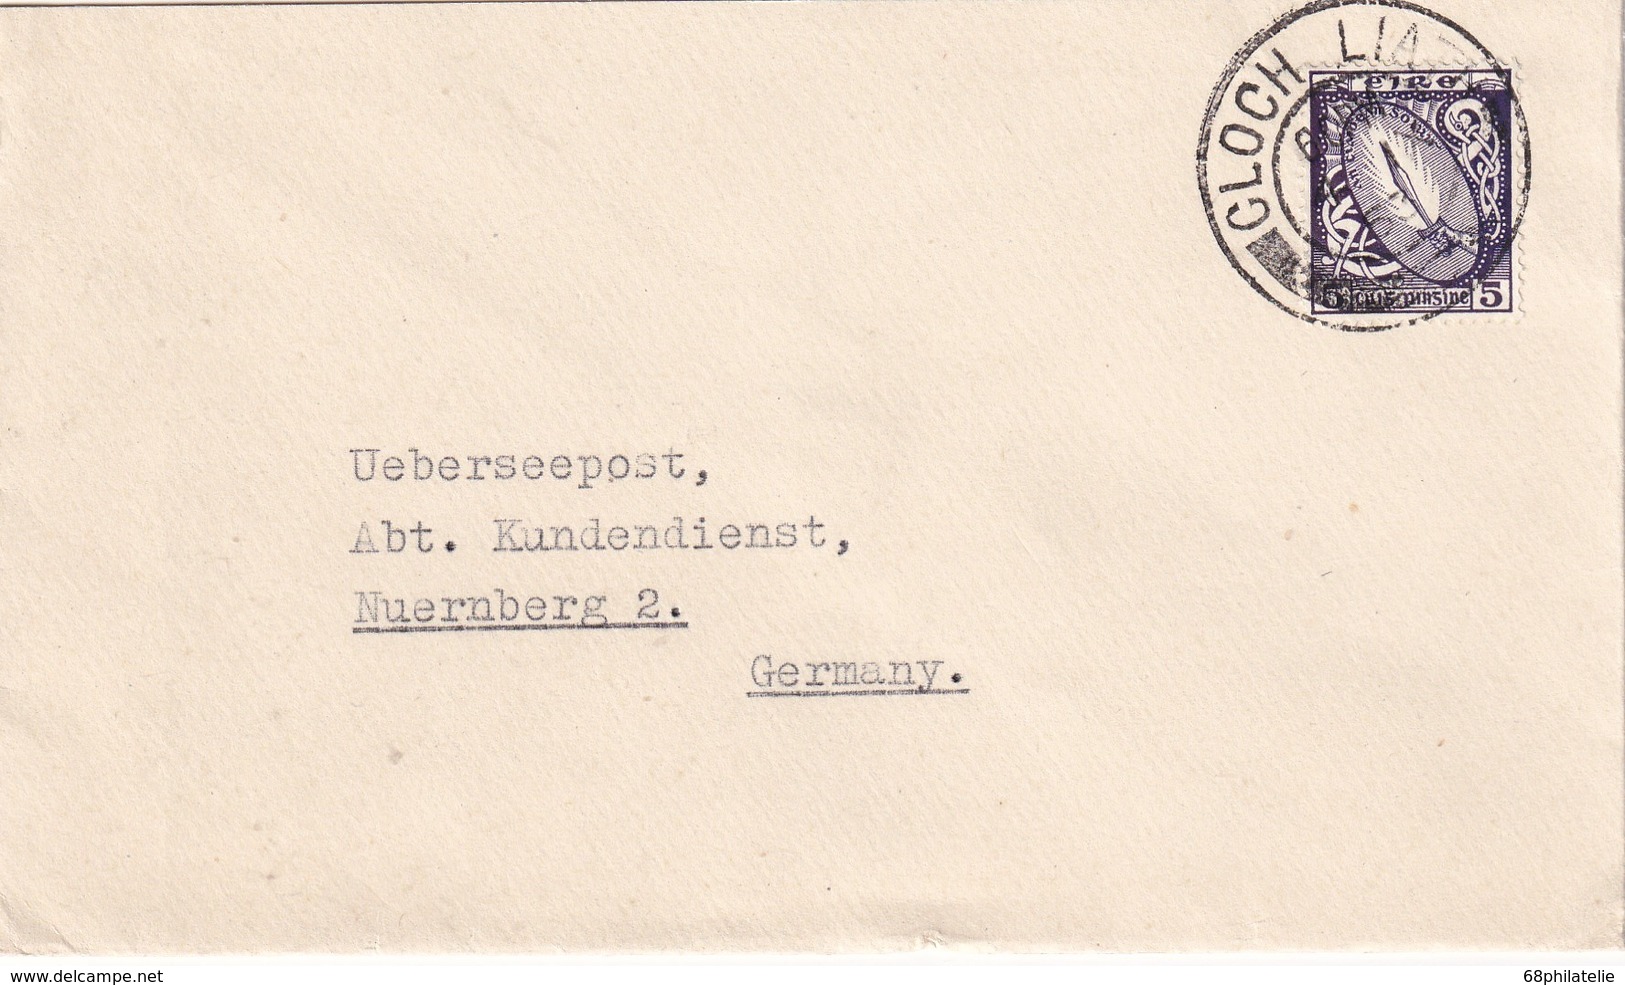 EIRE 1953 LETTRE DE CLOCHAN LIATH - Cartas & Documentos